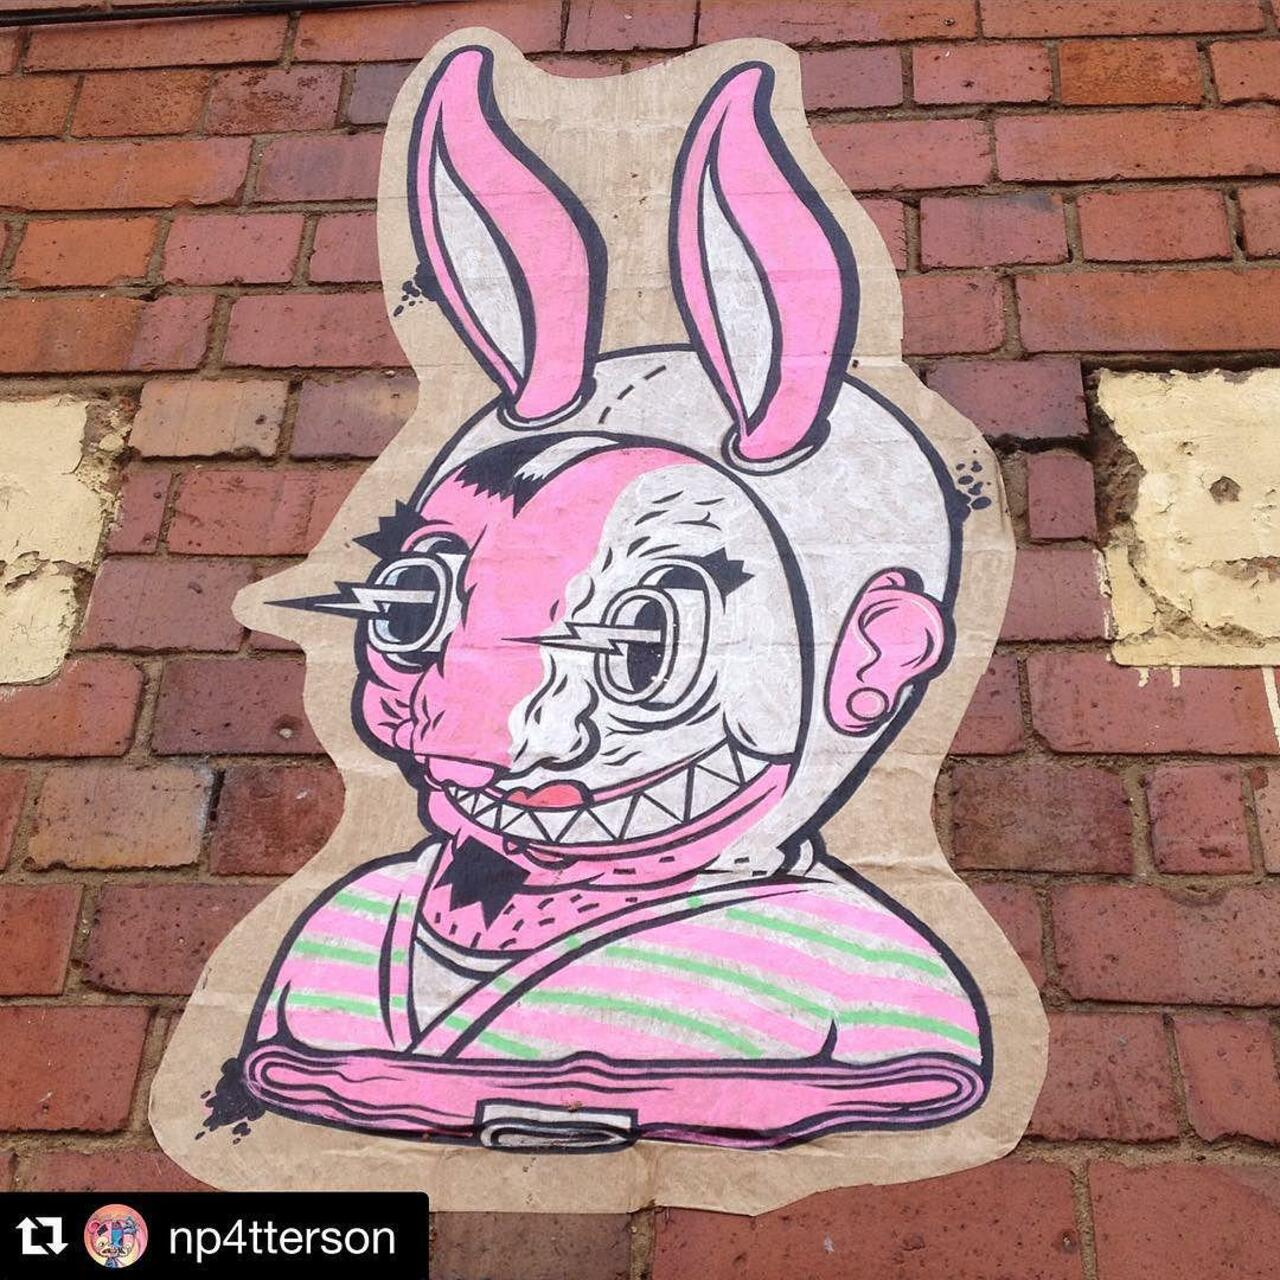 RT @digbeth: RT @GraffSpotting: #GraffSpotting #Instagram @setdebelleza #streetart #graffiti #digbeth @StreetArtBrum http://t.co/WVp0ajCiXj